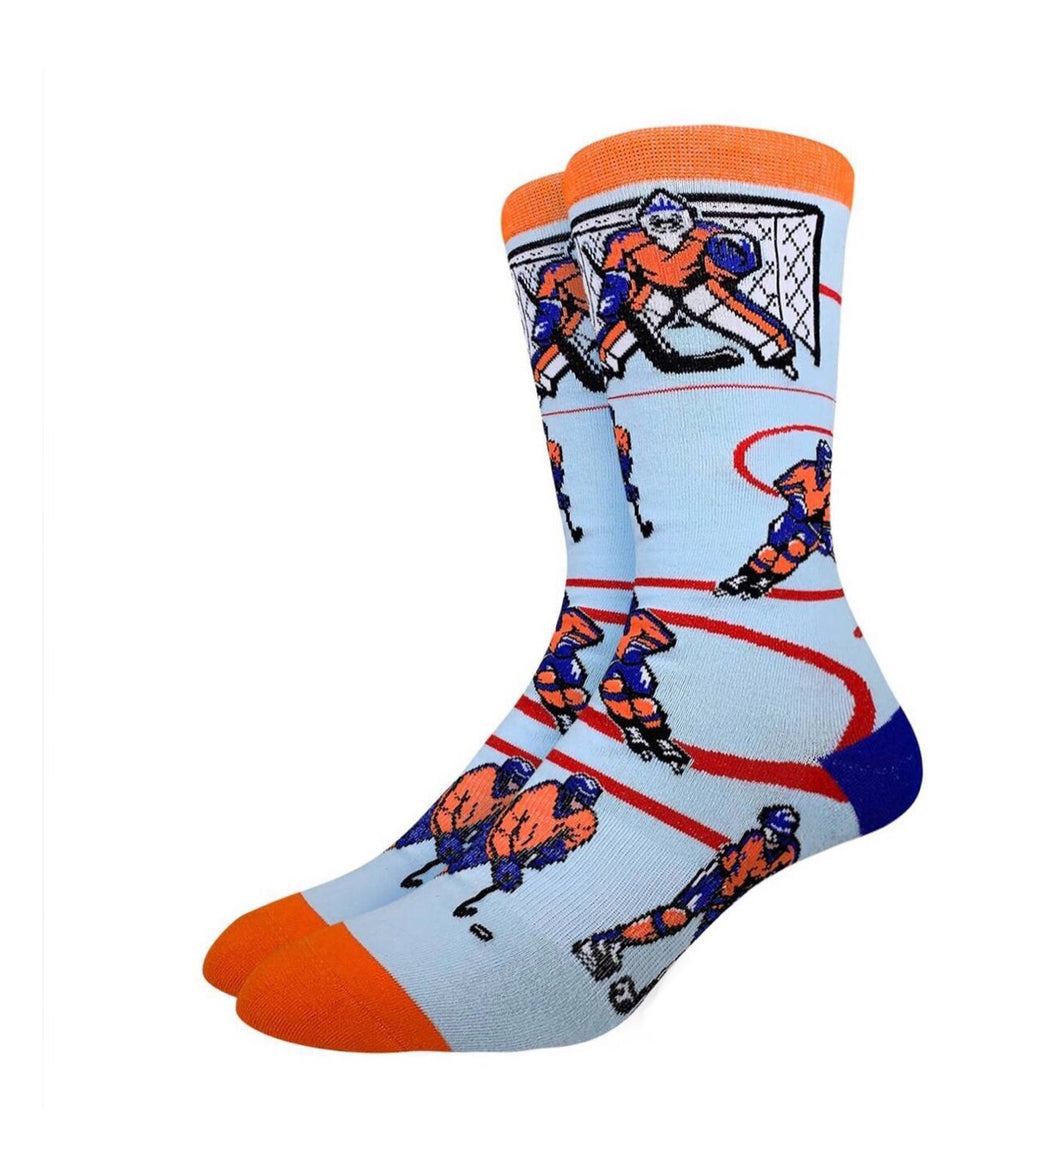 Men’s Hockey Orange Blue Socks